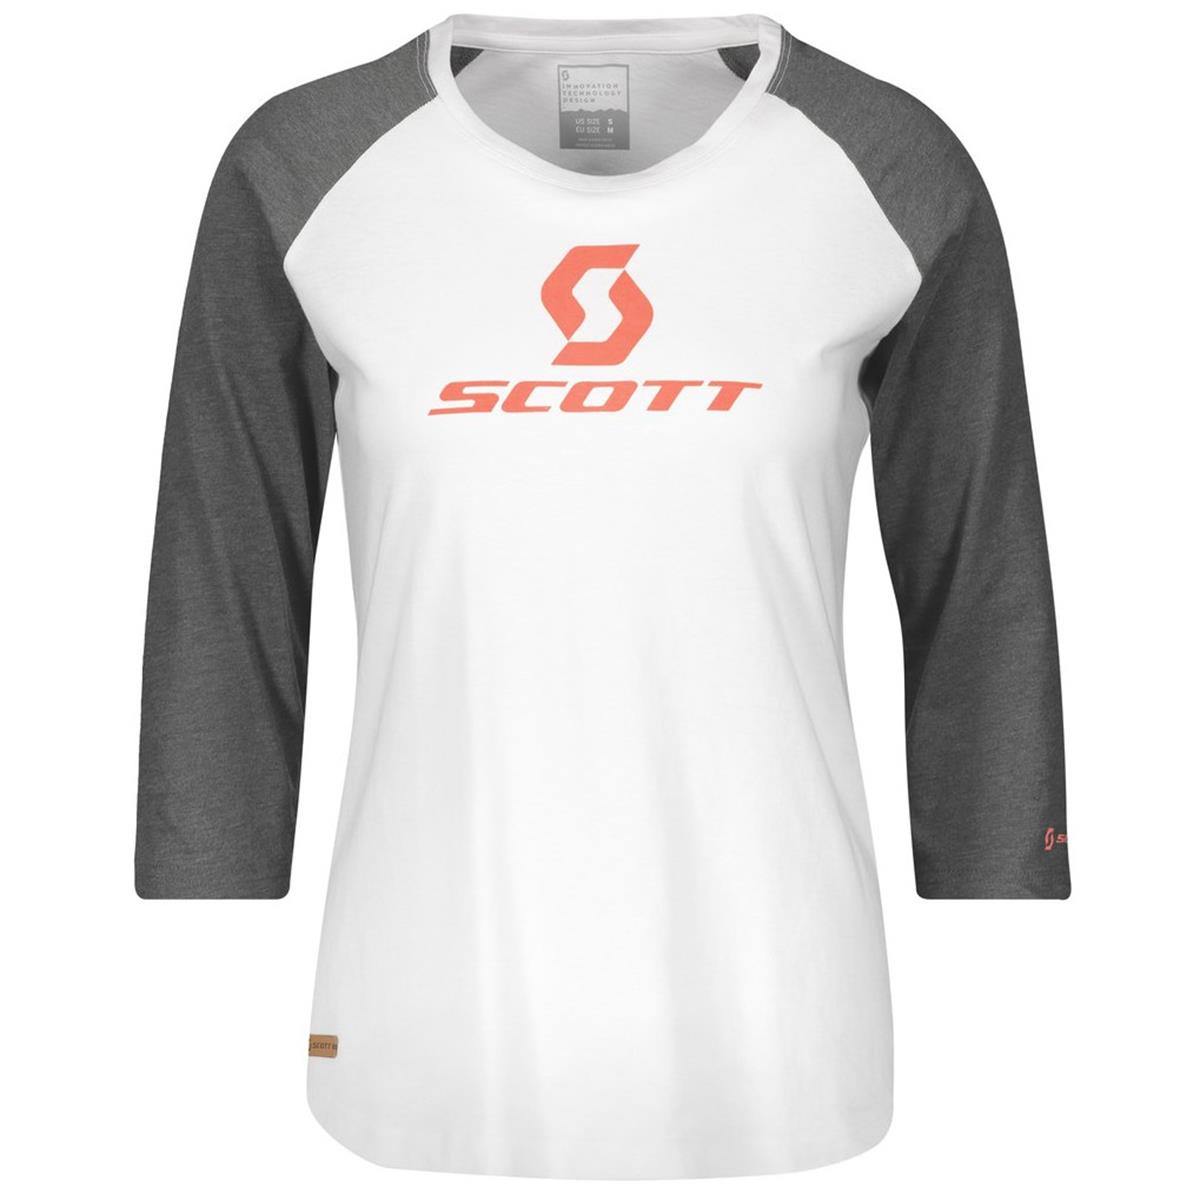 Scott Girls Raglan-Shirt 3/4-Arm 10 Icon Raglan Weiß/Dunkelgrau Melange